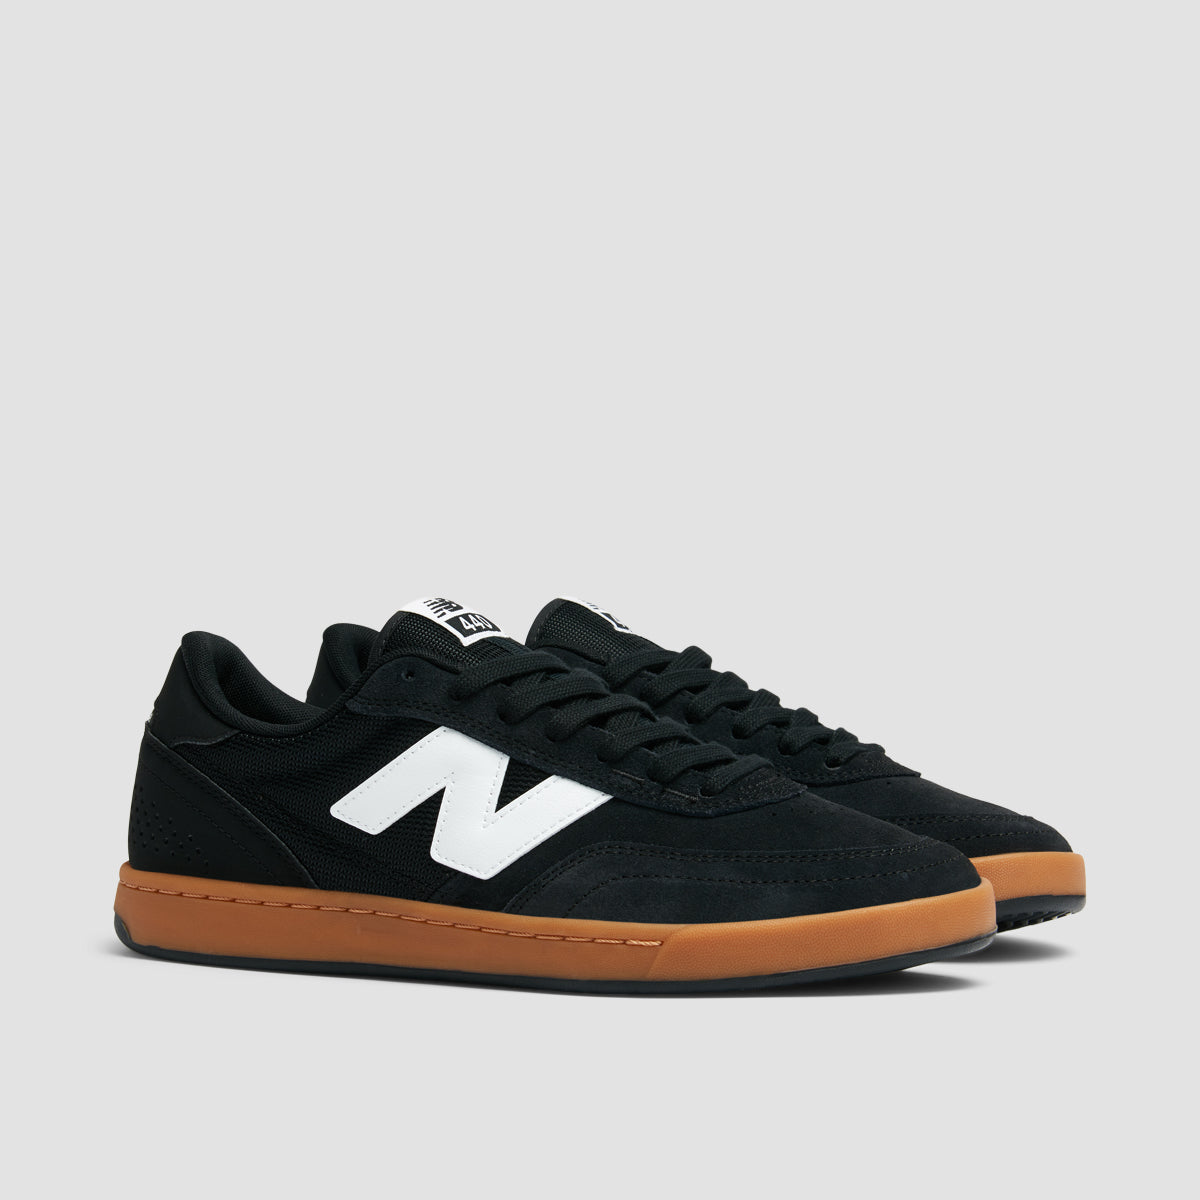 New Balance Numeric 440 V2 Shoes - Black/White